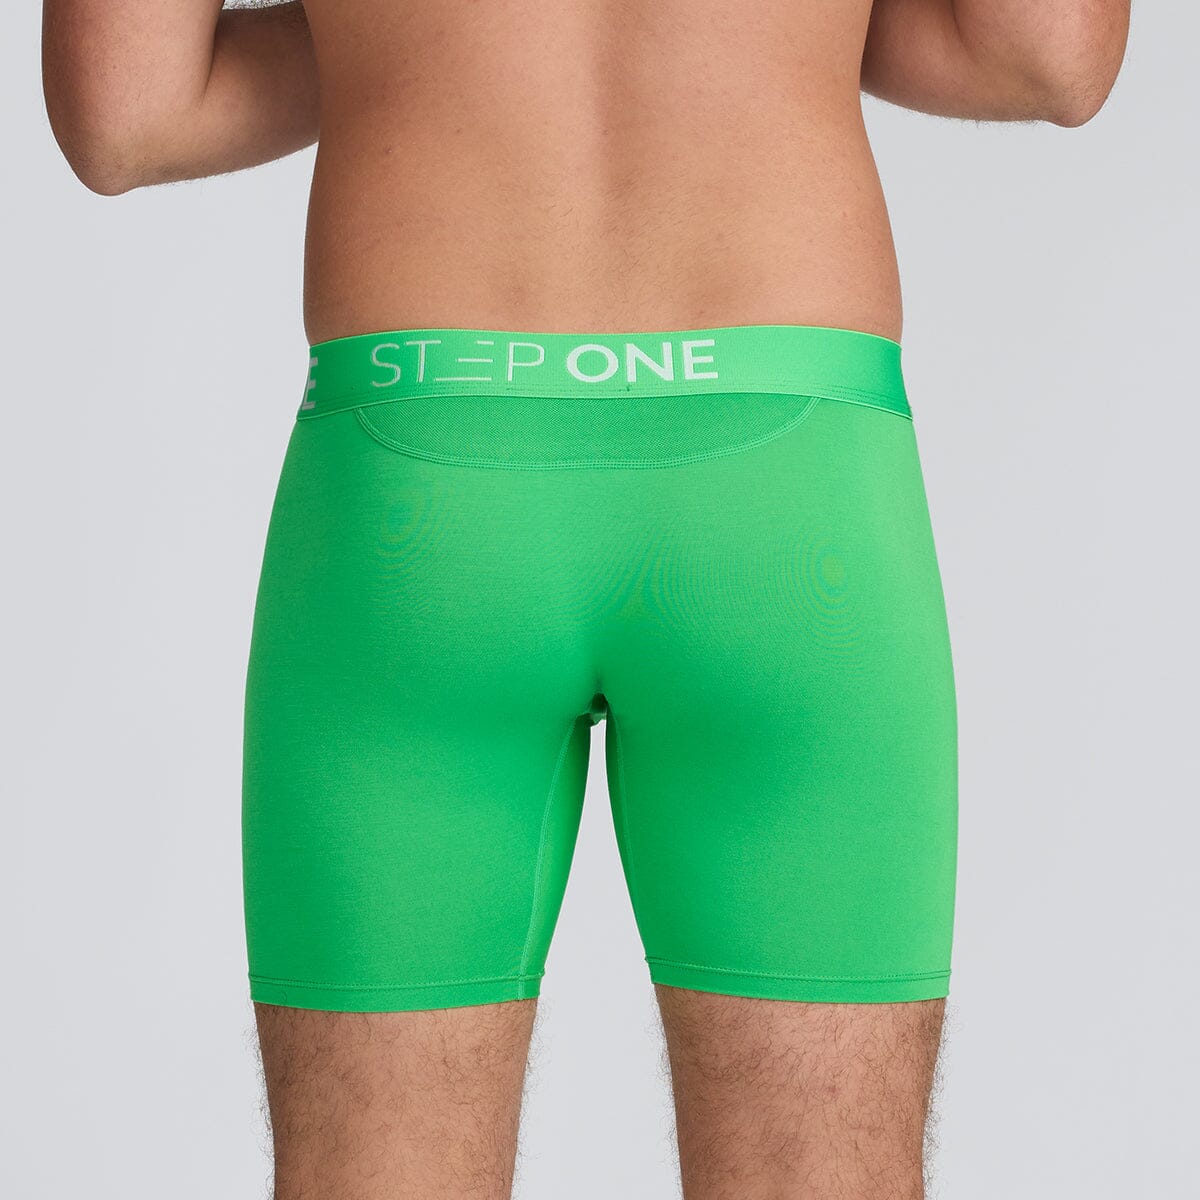 Boxer Brief - Green Screens - Bamboo Underwear